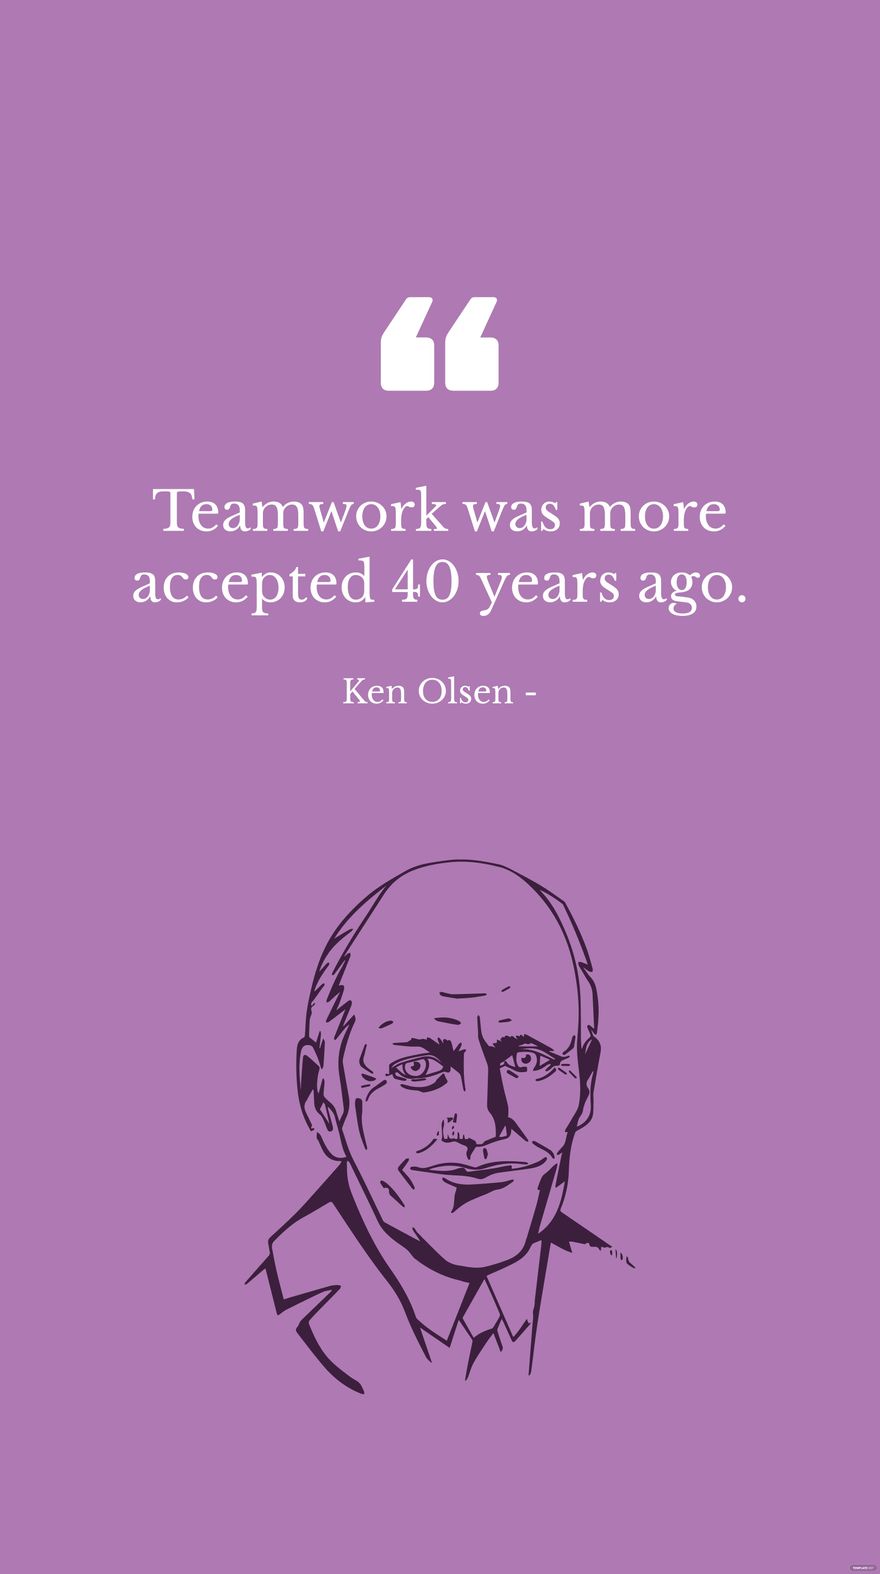 Free Ken Olsen - Teamwork was more accepted 40 years ago. in JPG